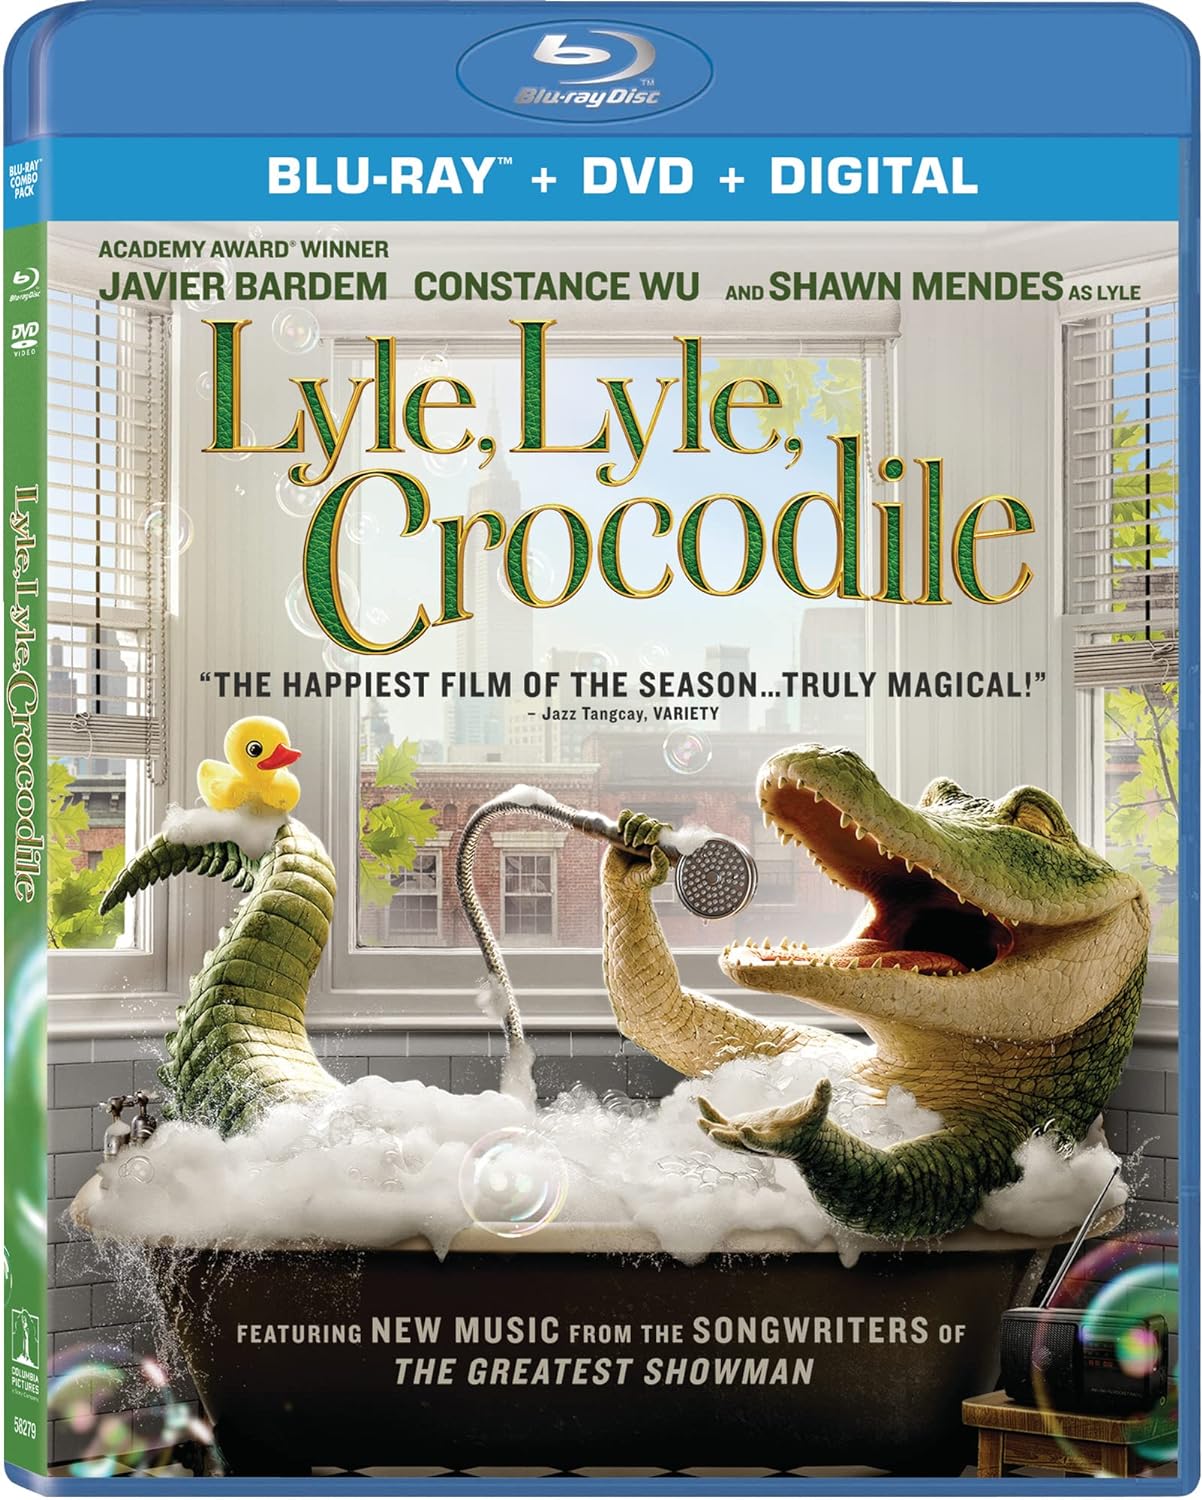 Lyle, Lyle, Crocodile HD Code (Movies Anywhere)